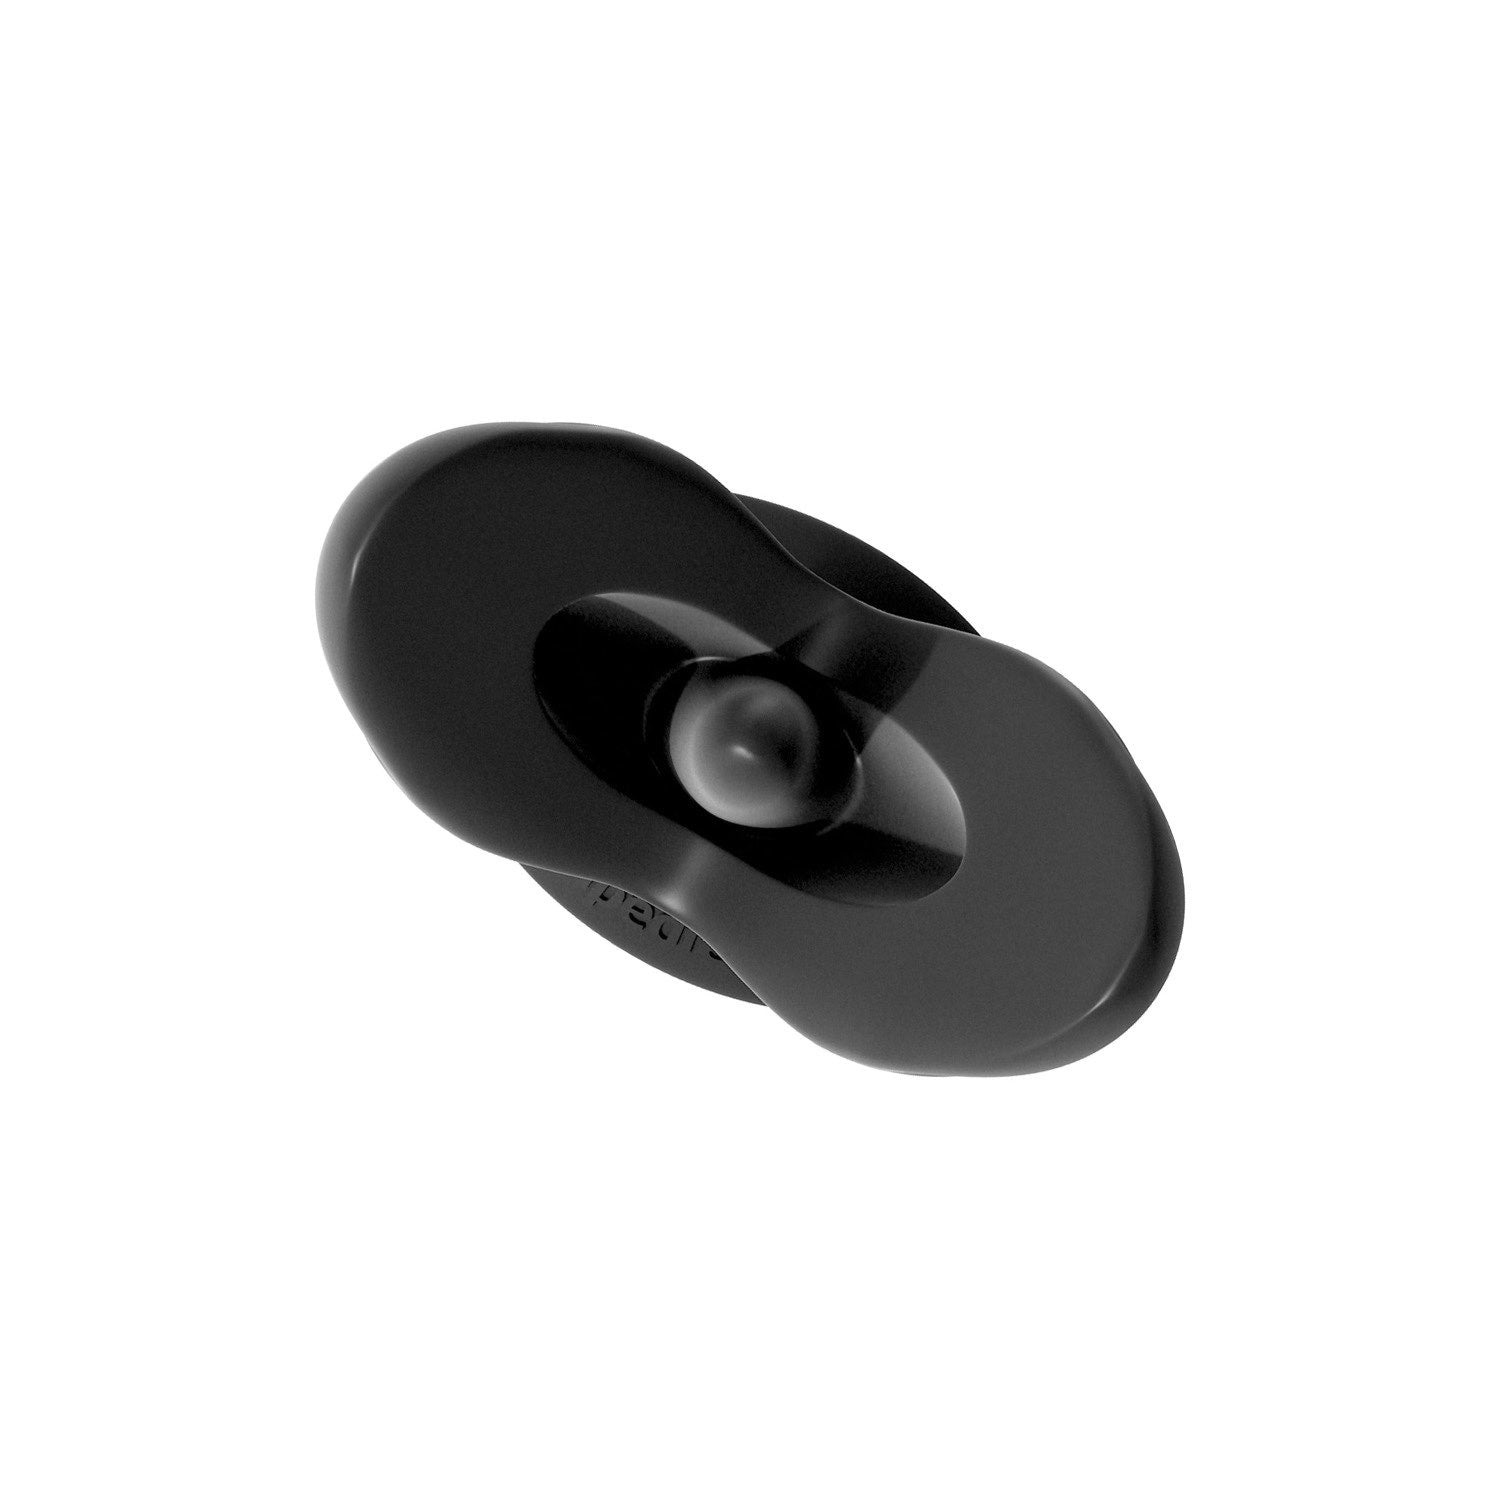 गुदा काल्पनिक संग्रह इंस्टा-गेपर - काला 9.5 सेमी (3.7&quot;) गैपिंग बट प्लग by Pipedream